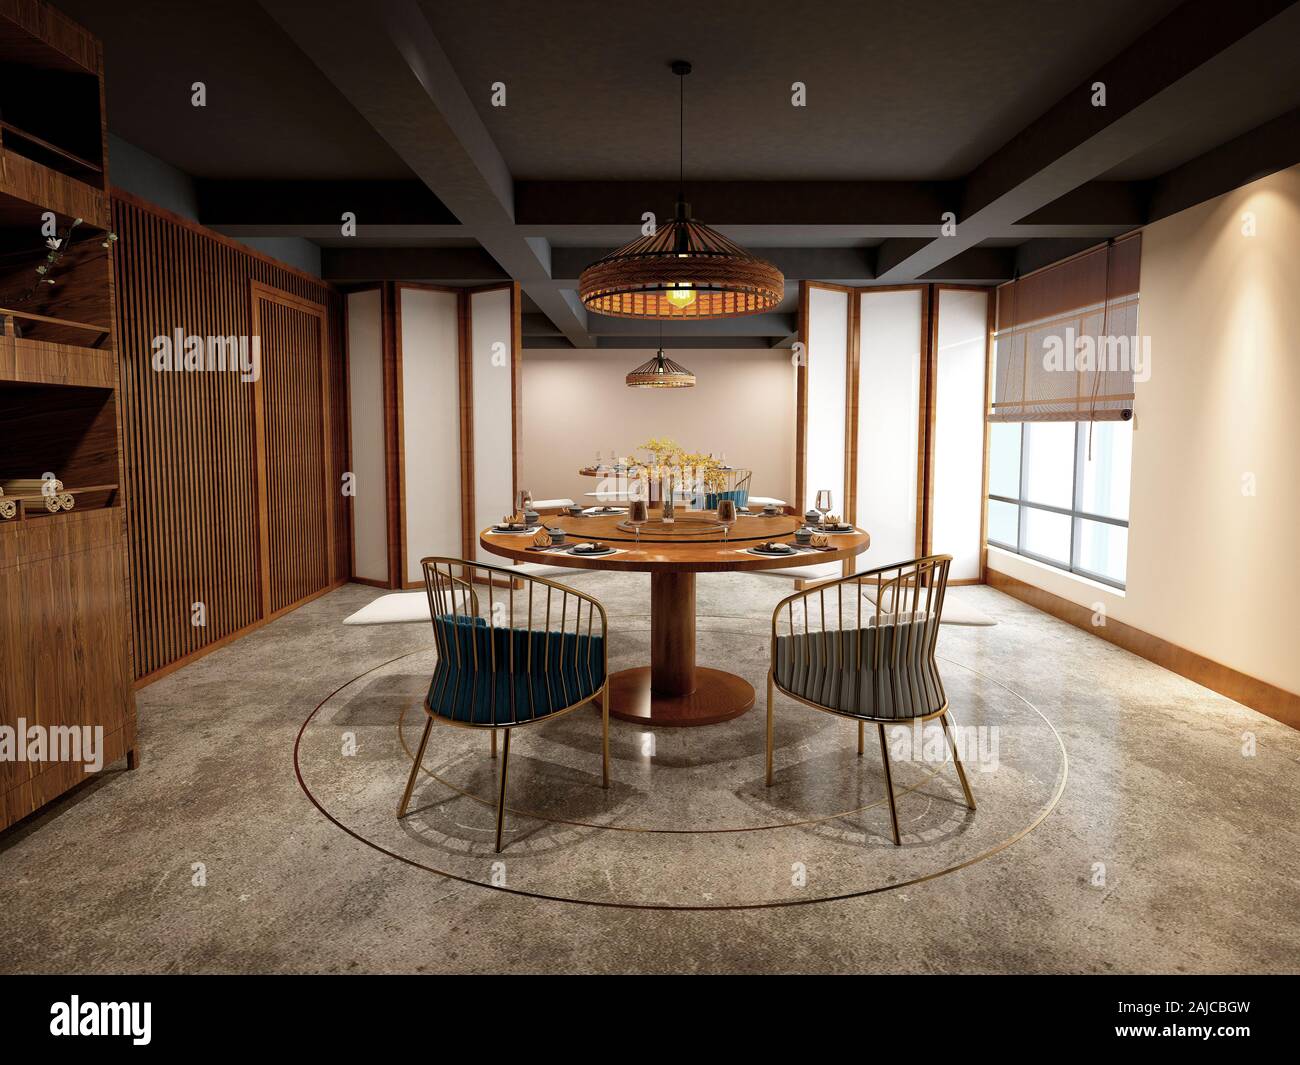 3d render of modern home interior living room Stock Photo